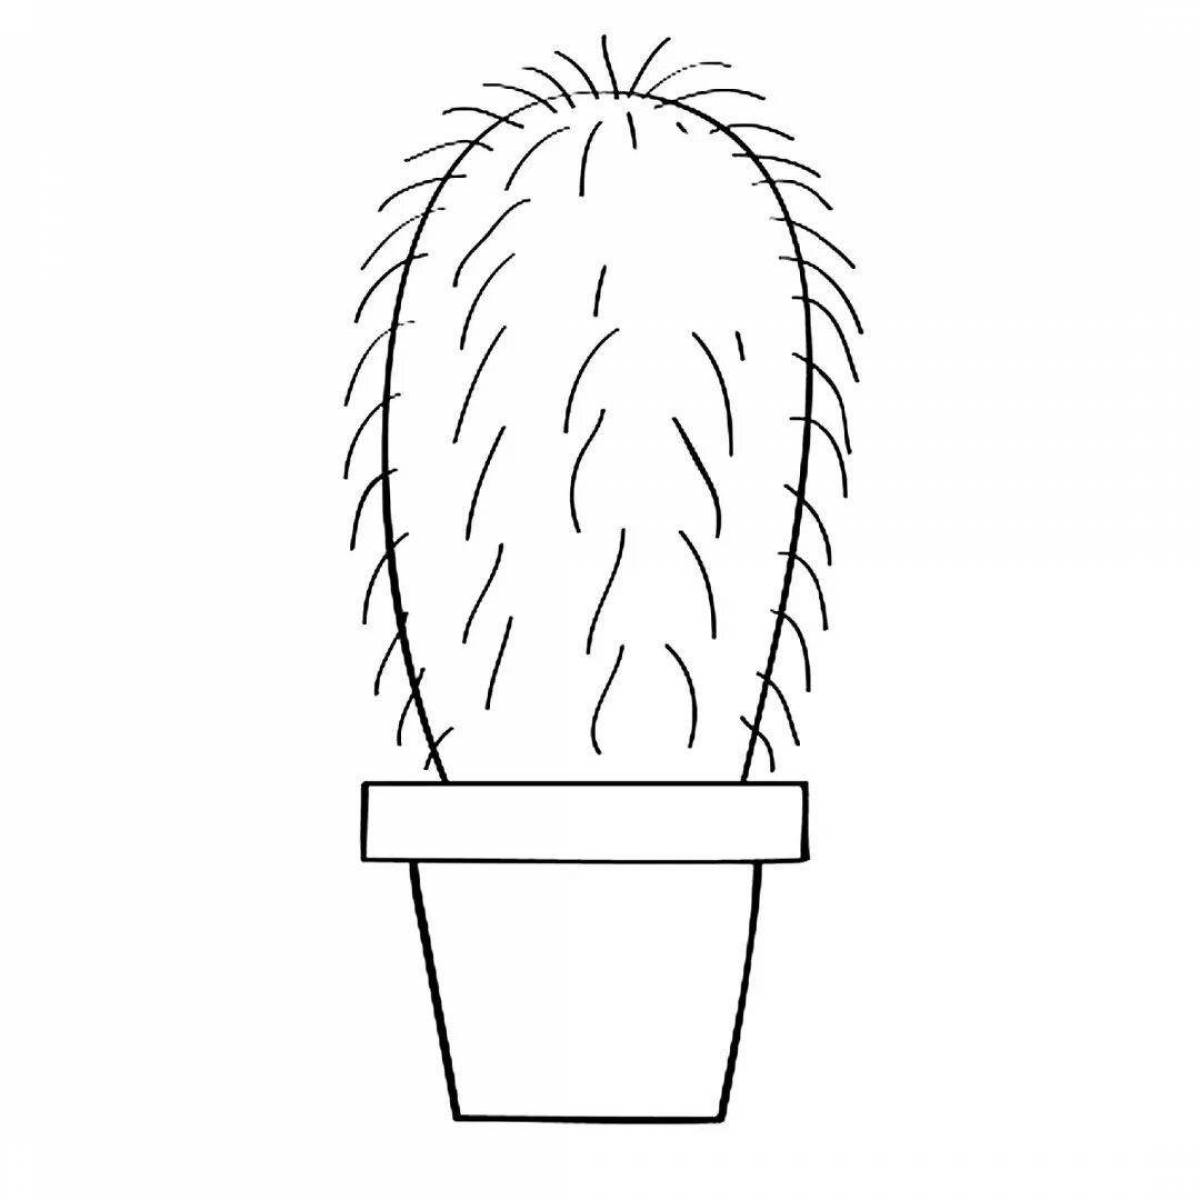 Flowering cactus in a pot